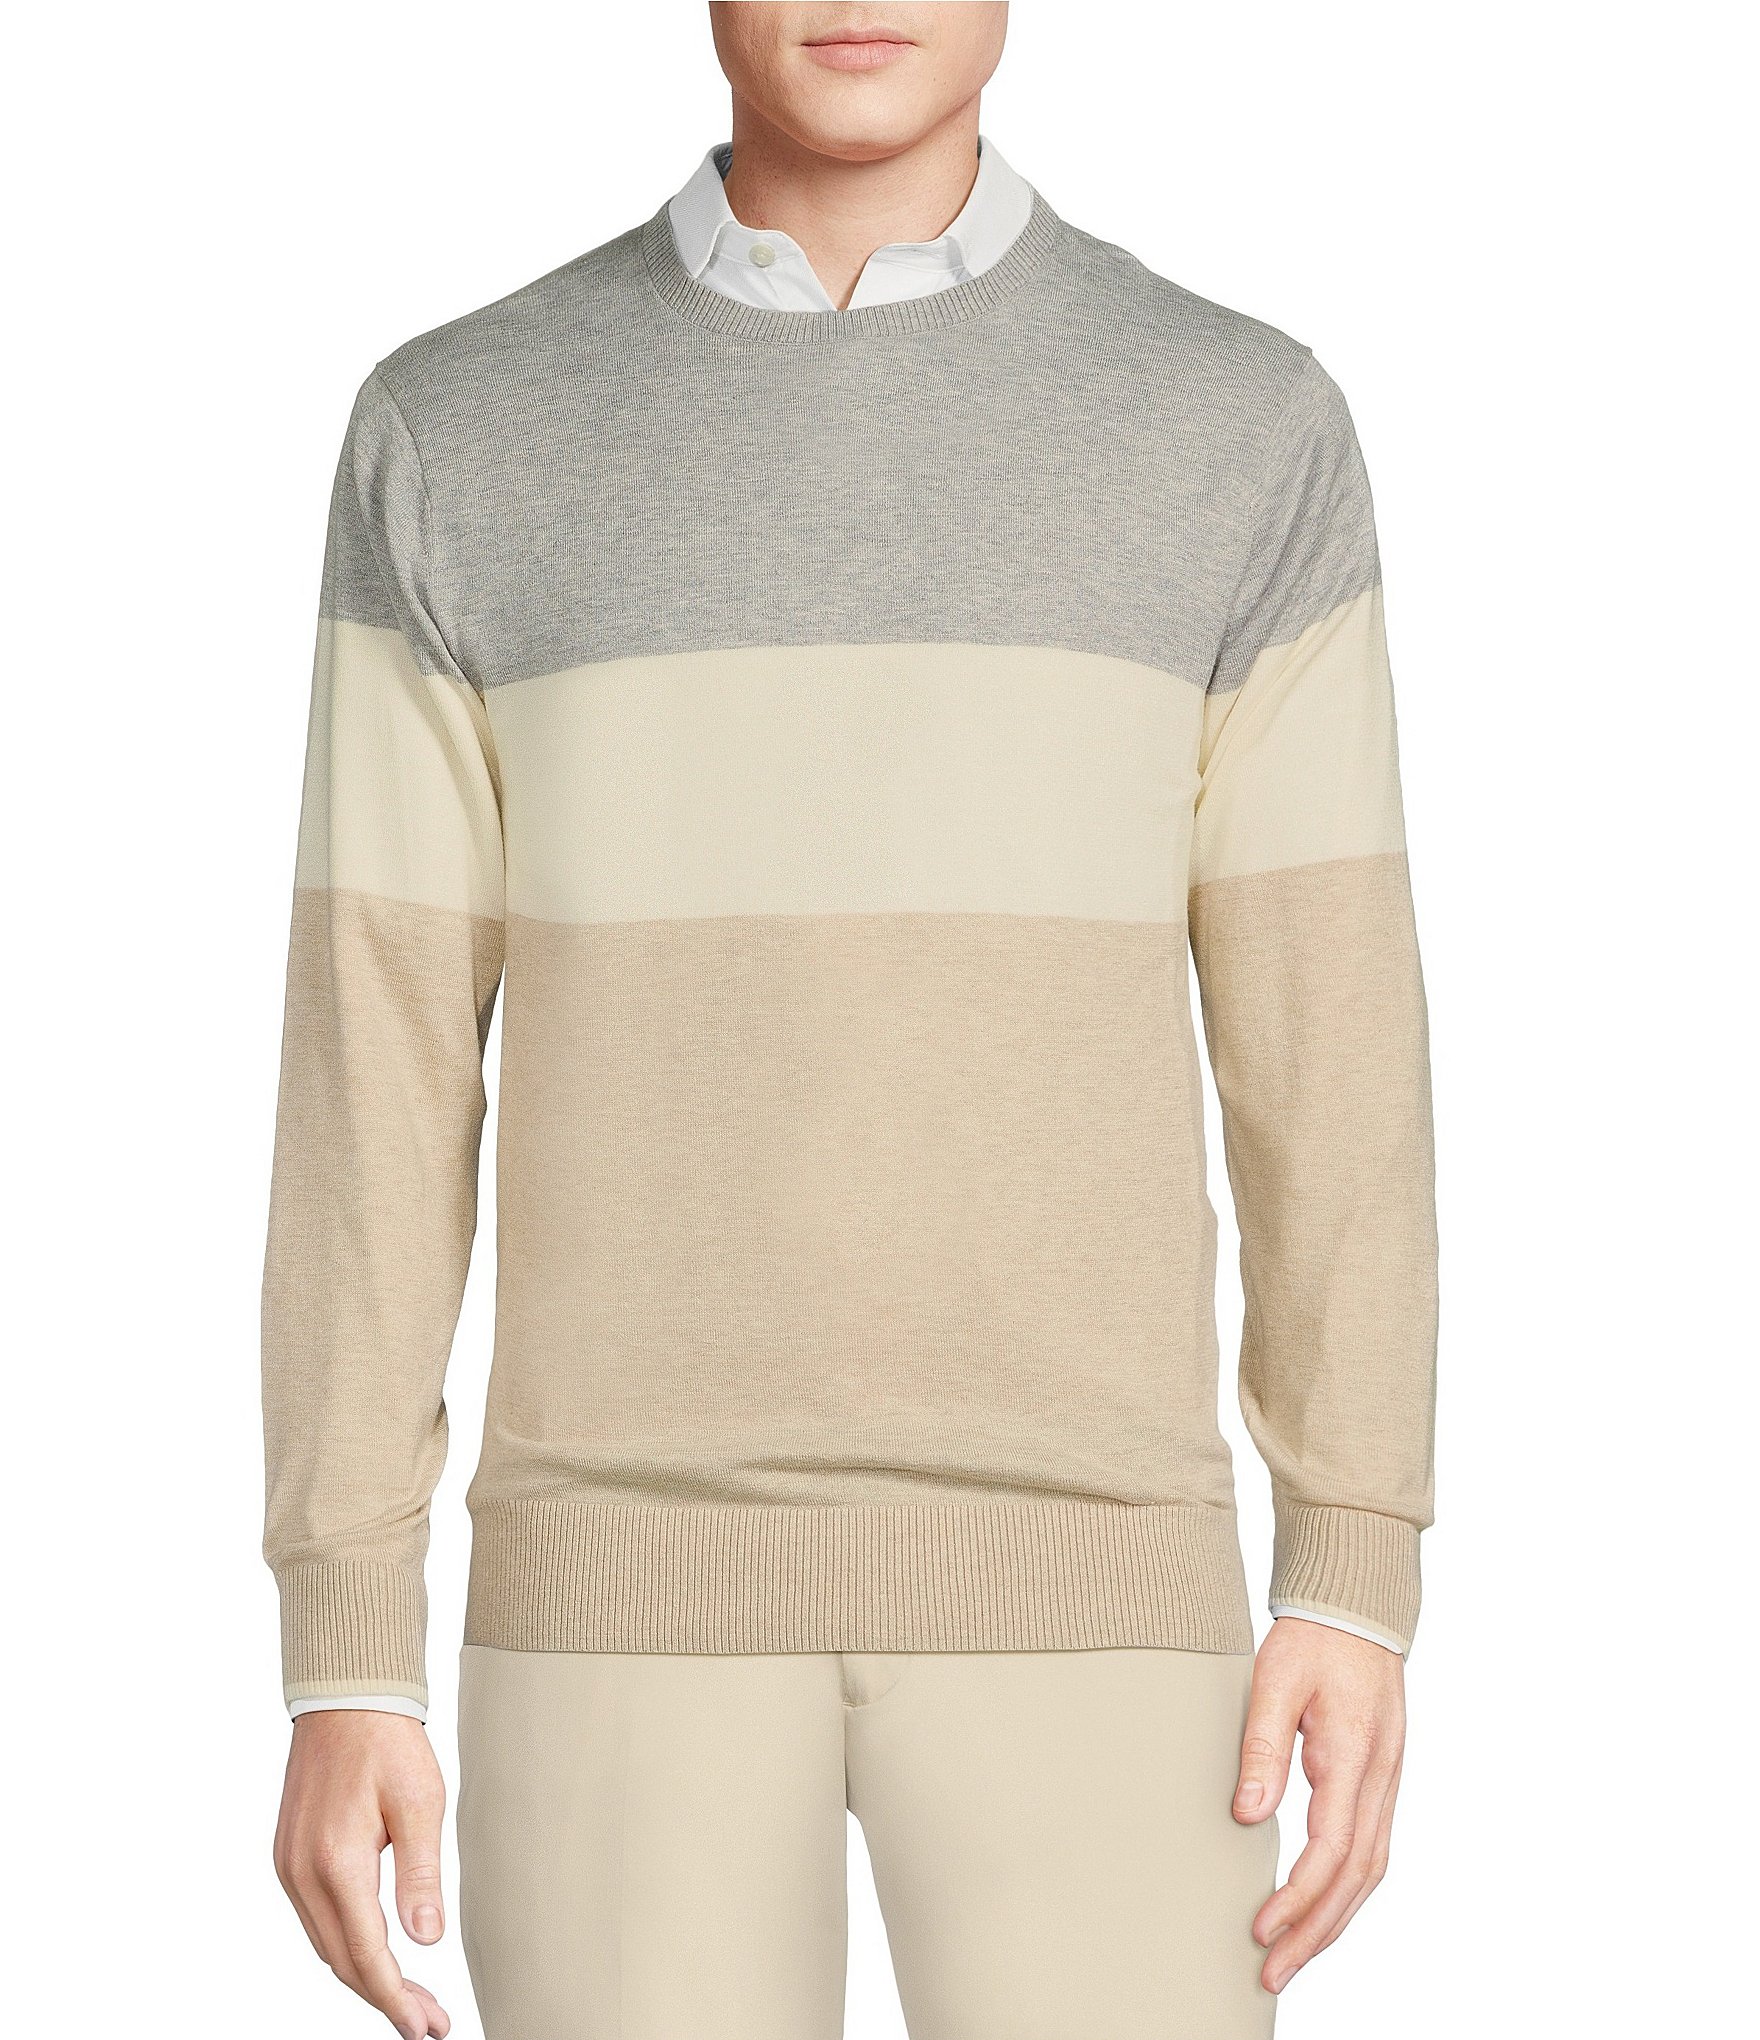 Daniel Cremieux Sweater Top Sellers | bellvalefarms.com